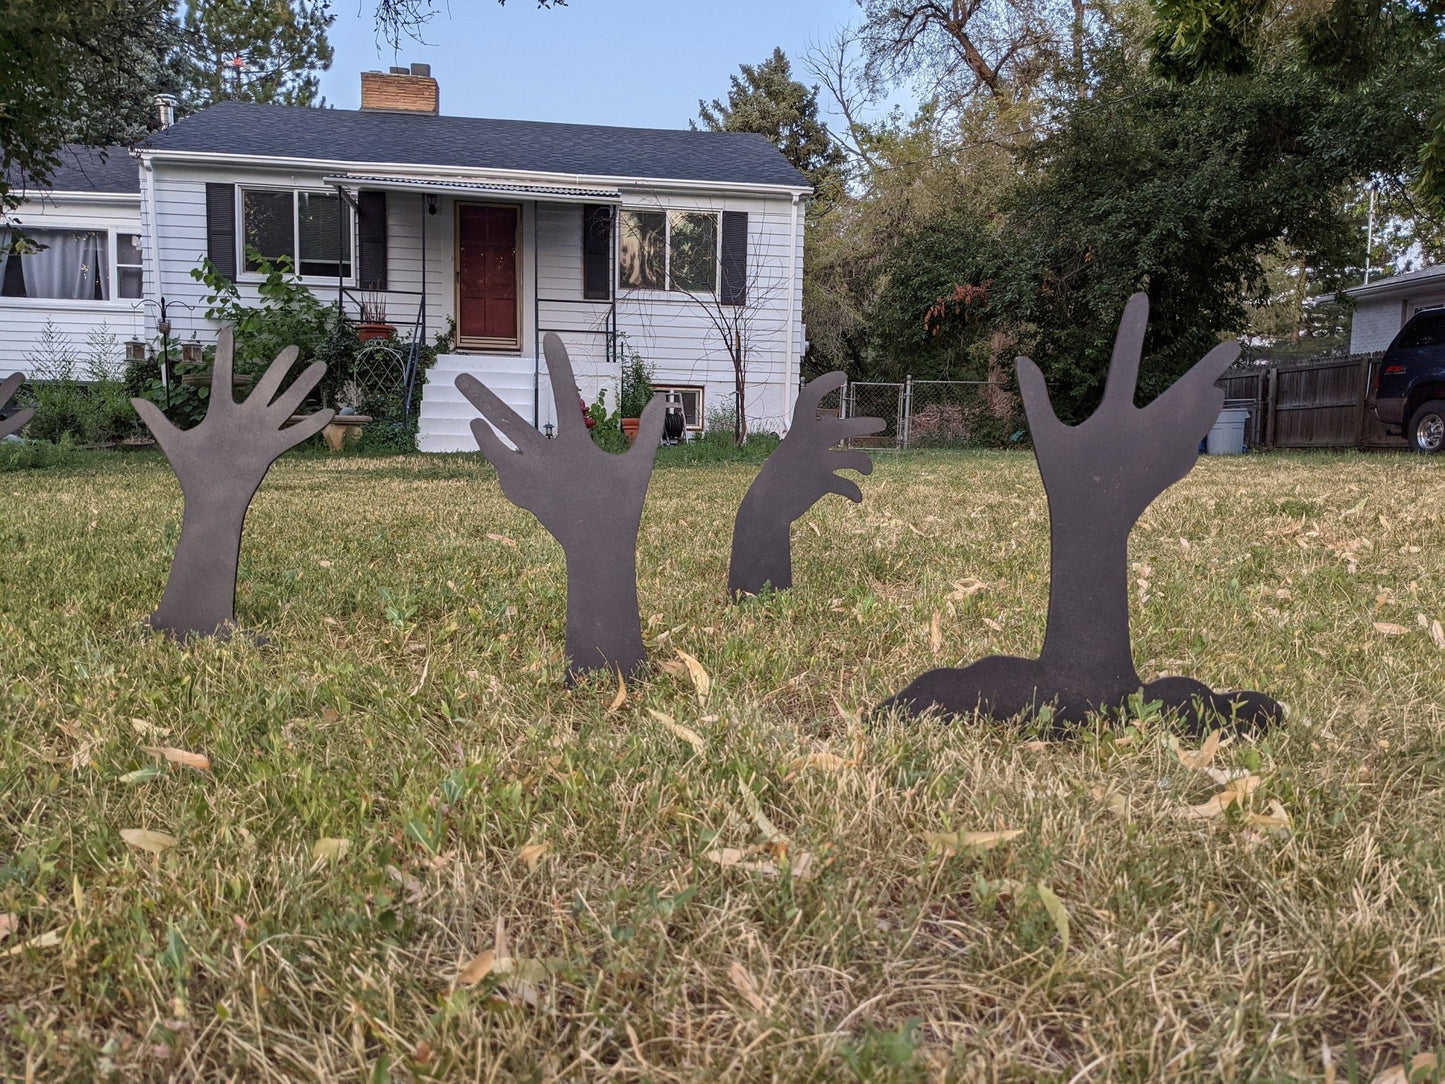 Halloween Scary Zombie Arms Yard Art Decorations (Set of 8) - TitanOakDecor